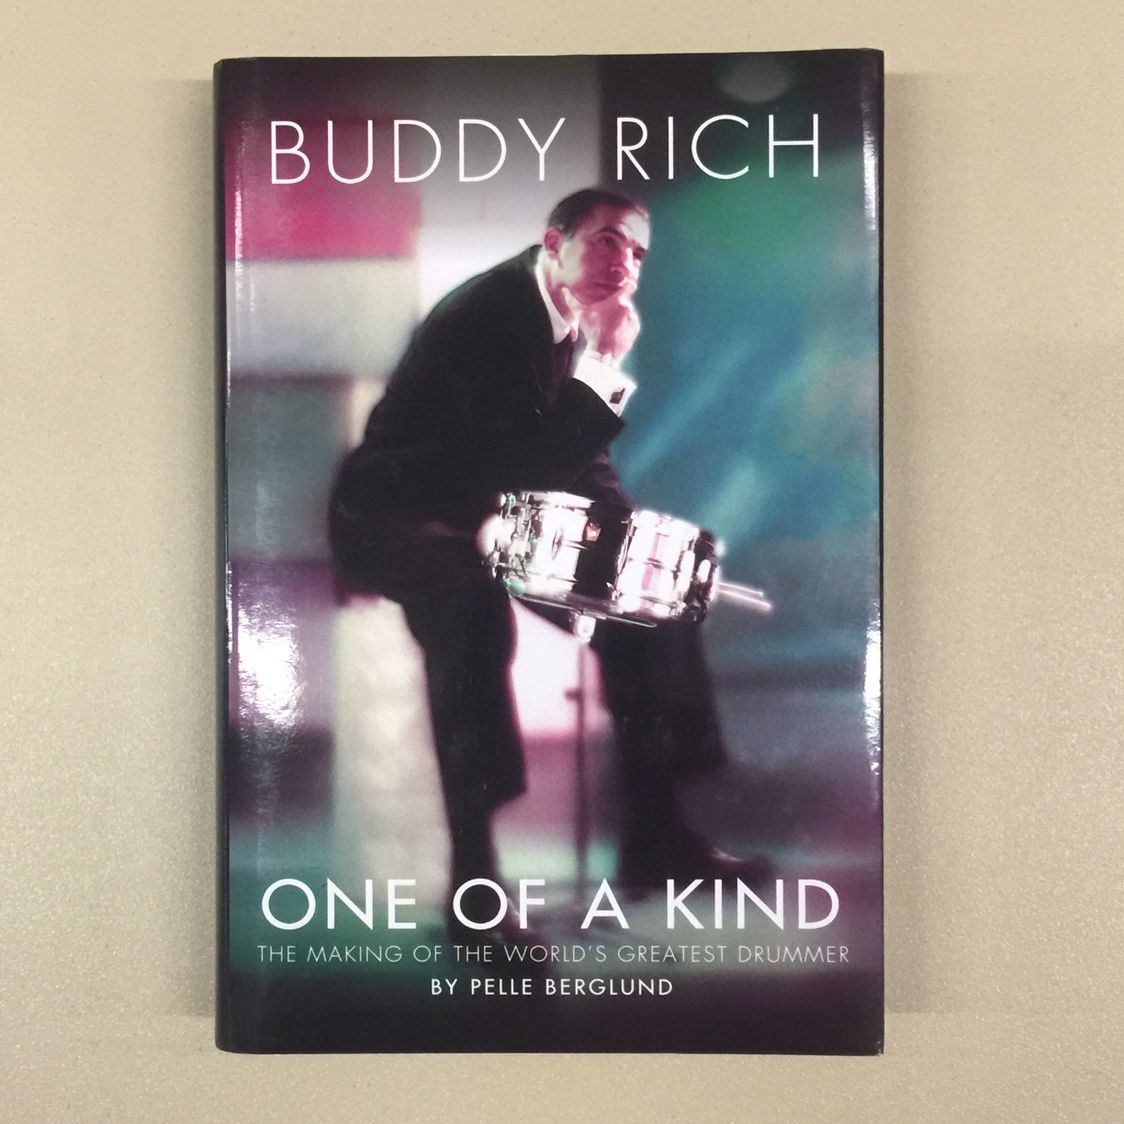 Buddy Rich One of a Kind